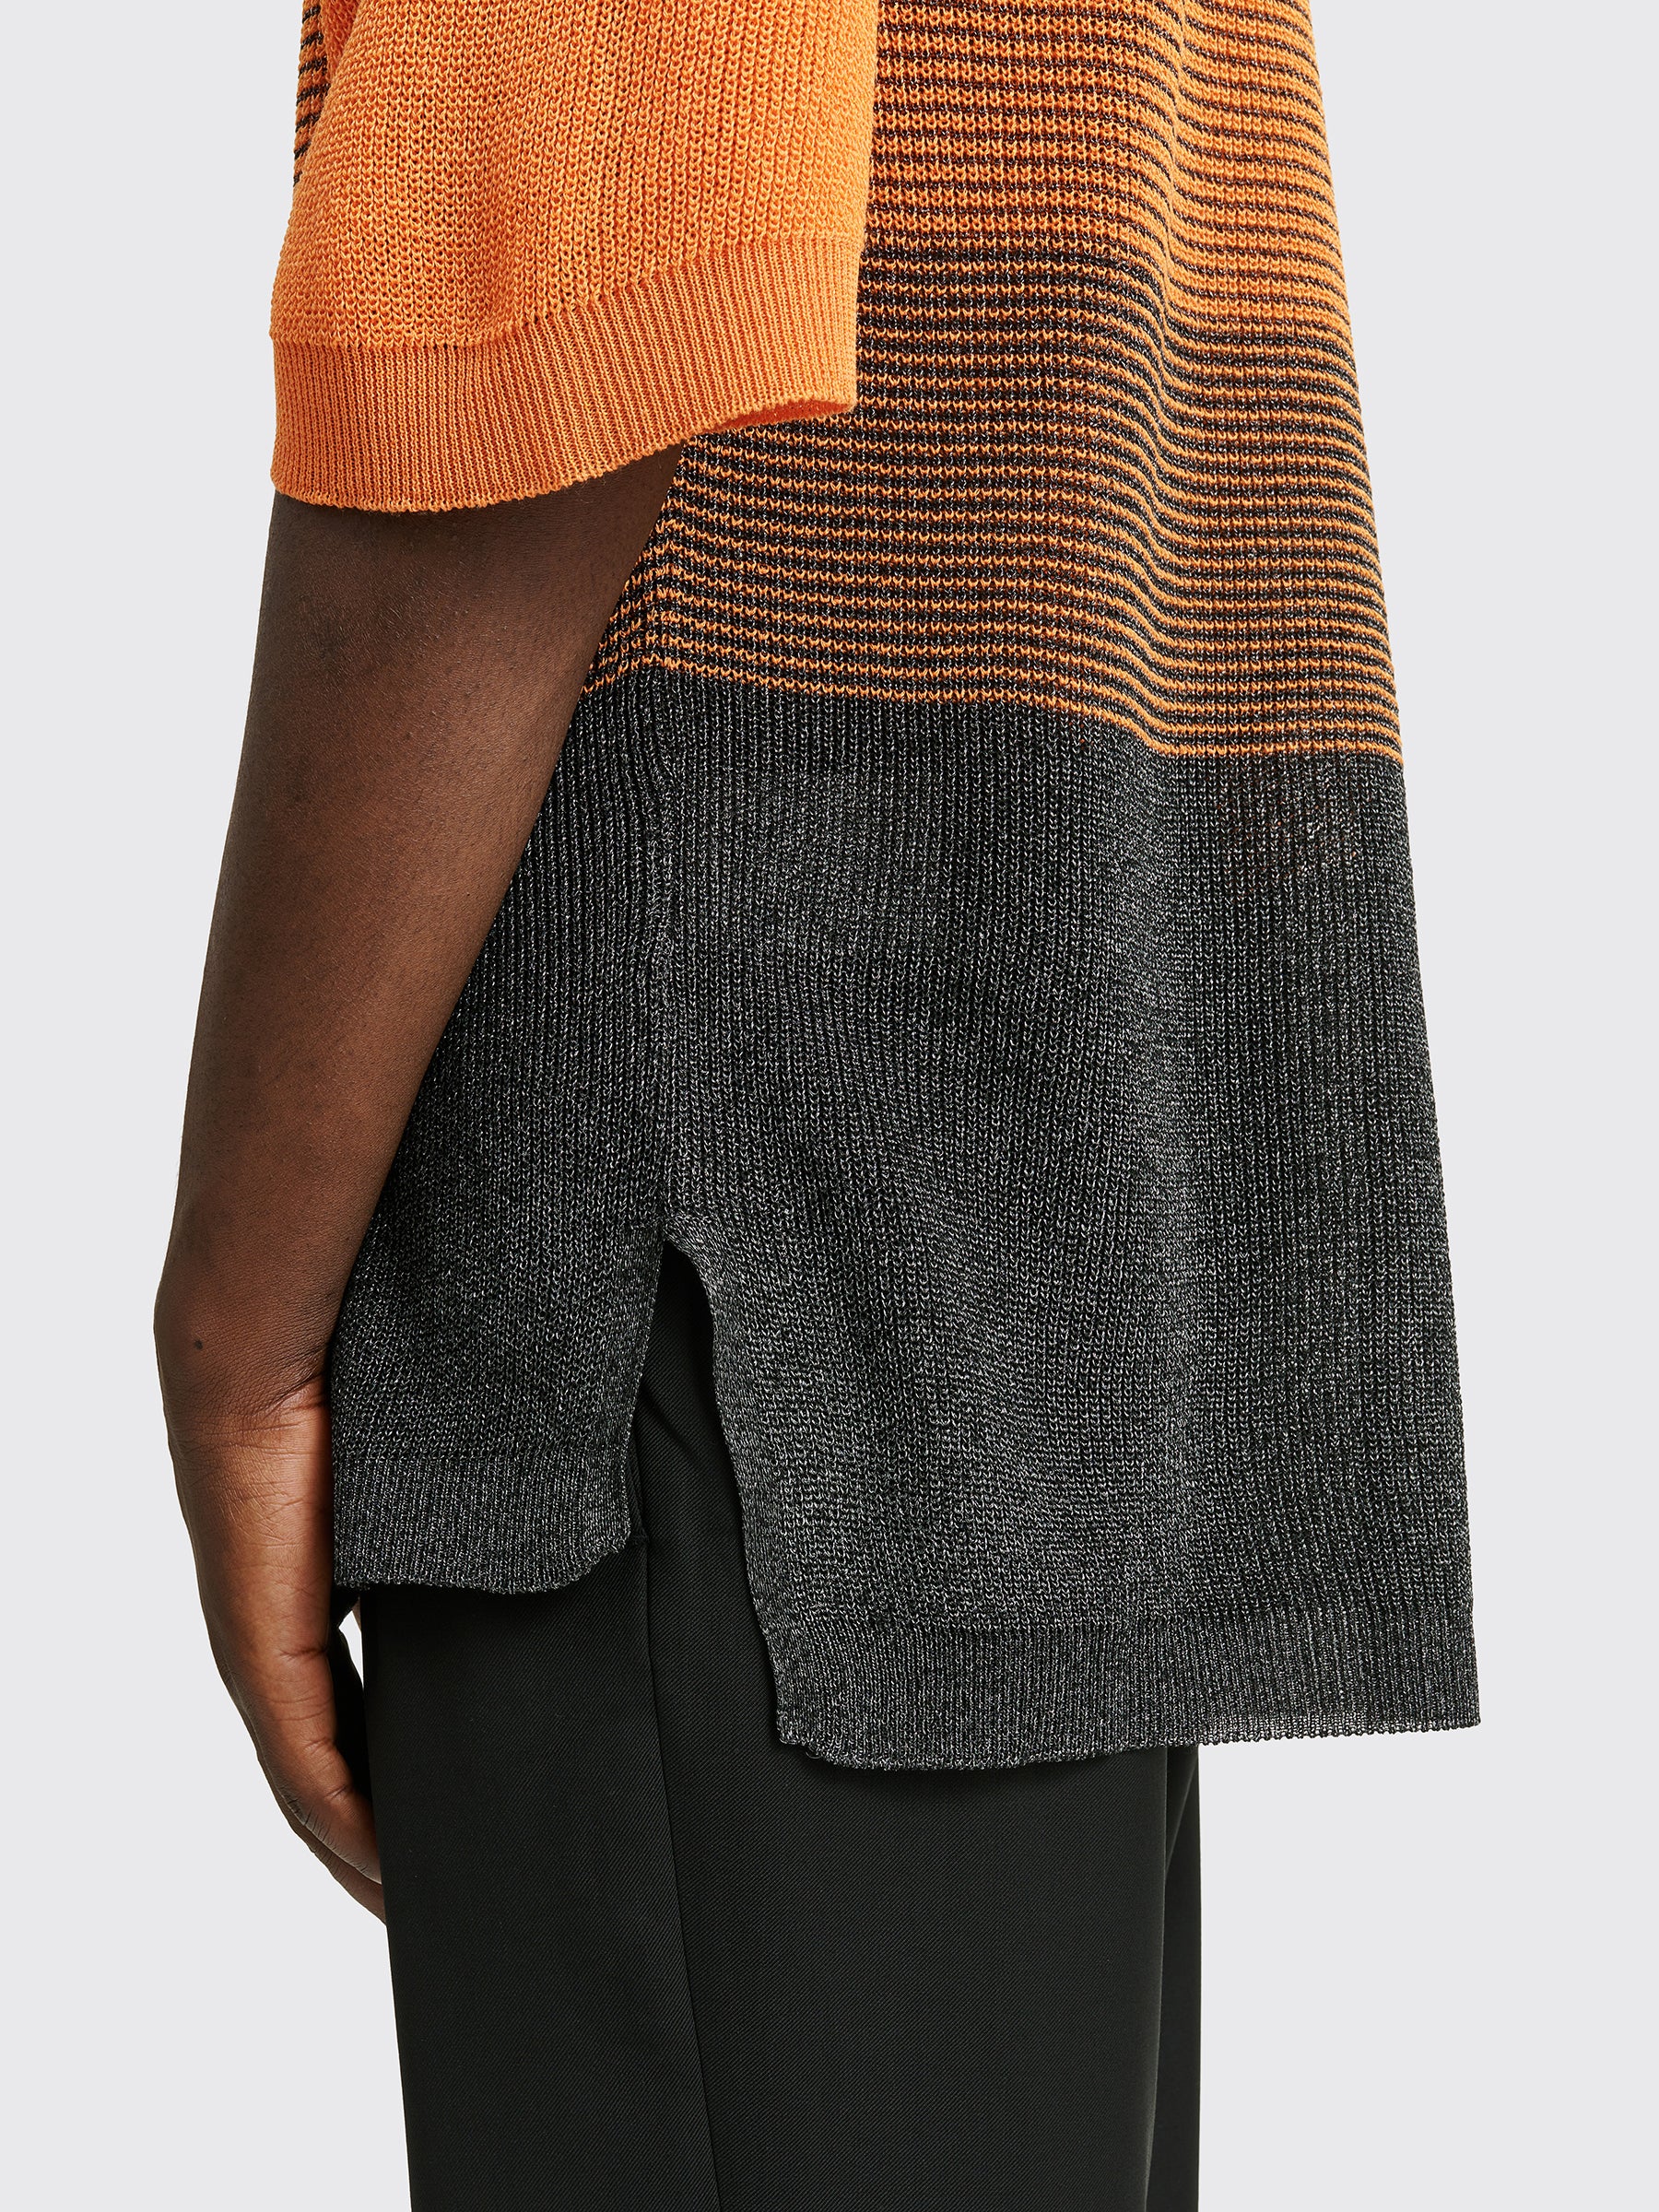 TRÈS BIEN everywear Gradient Sports Knit Orange / Black